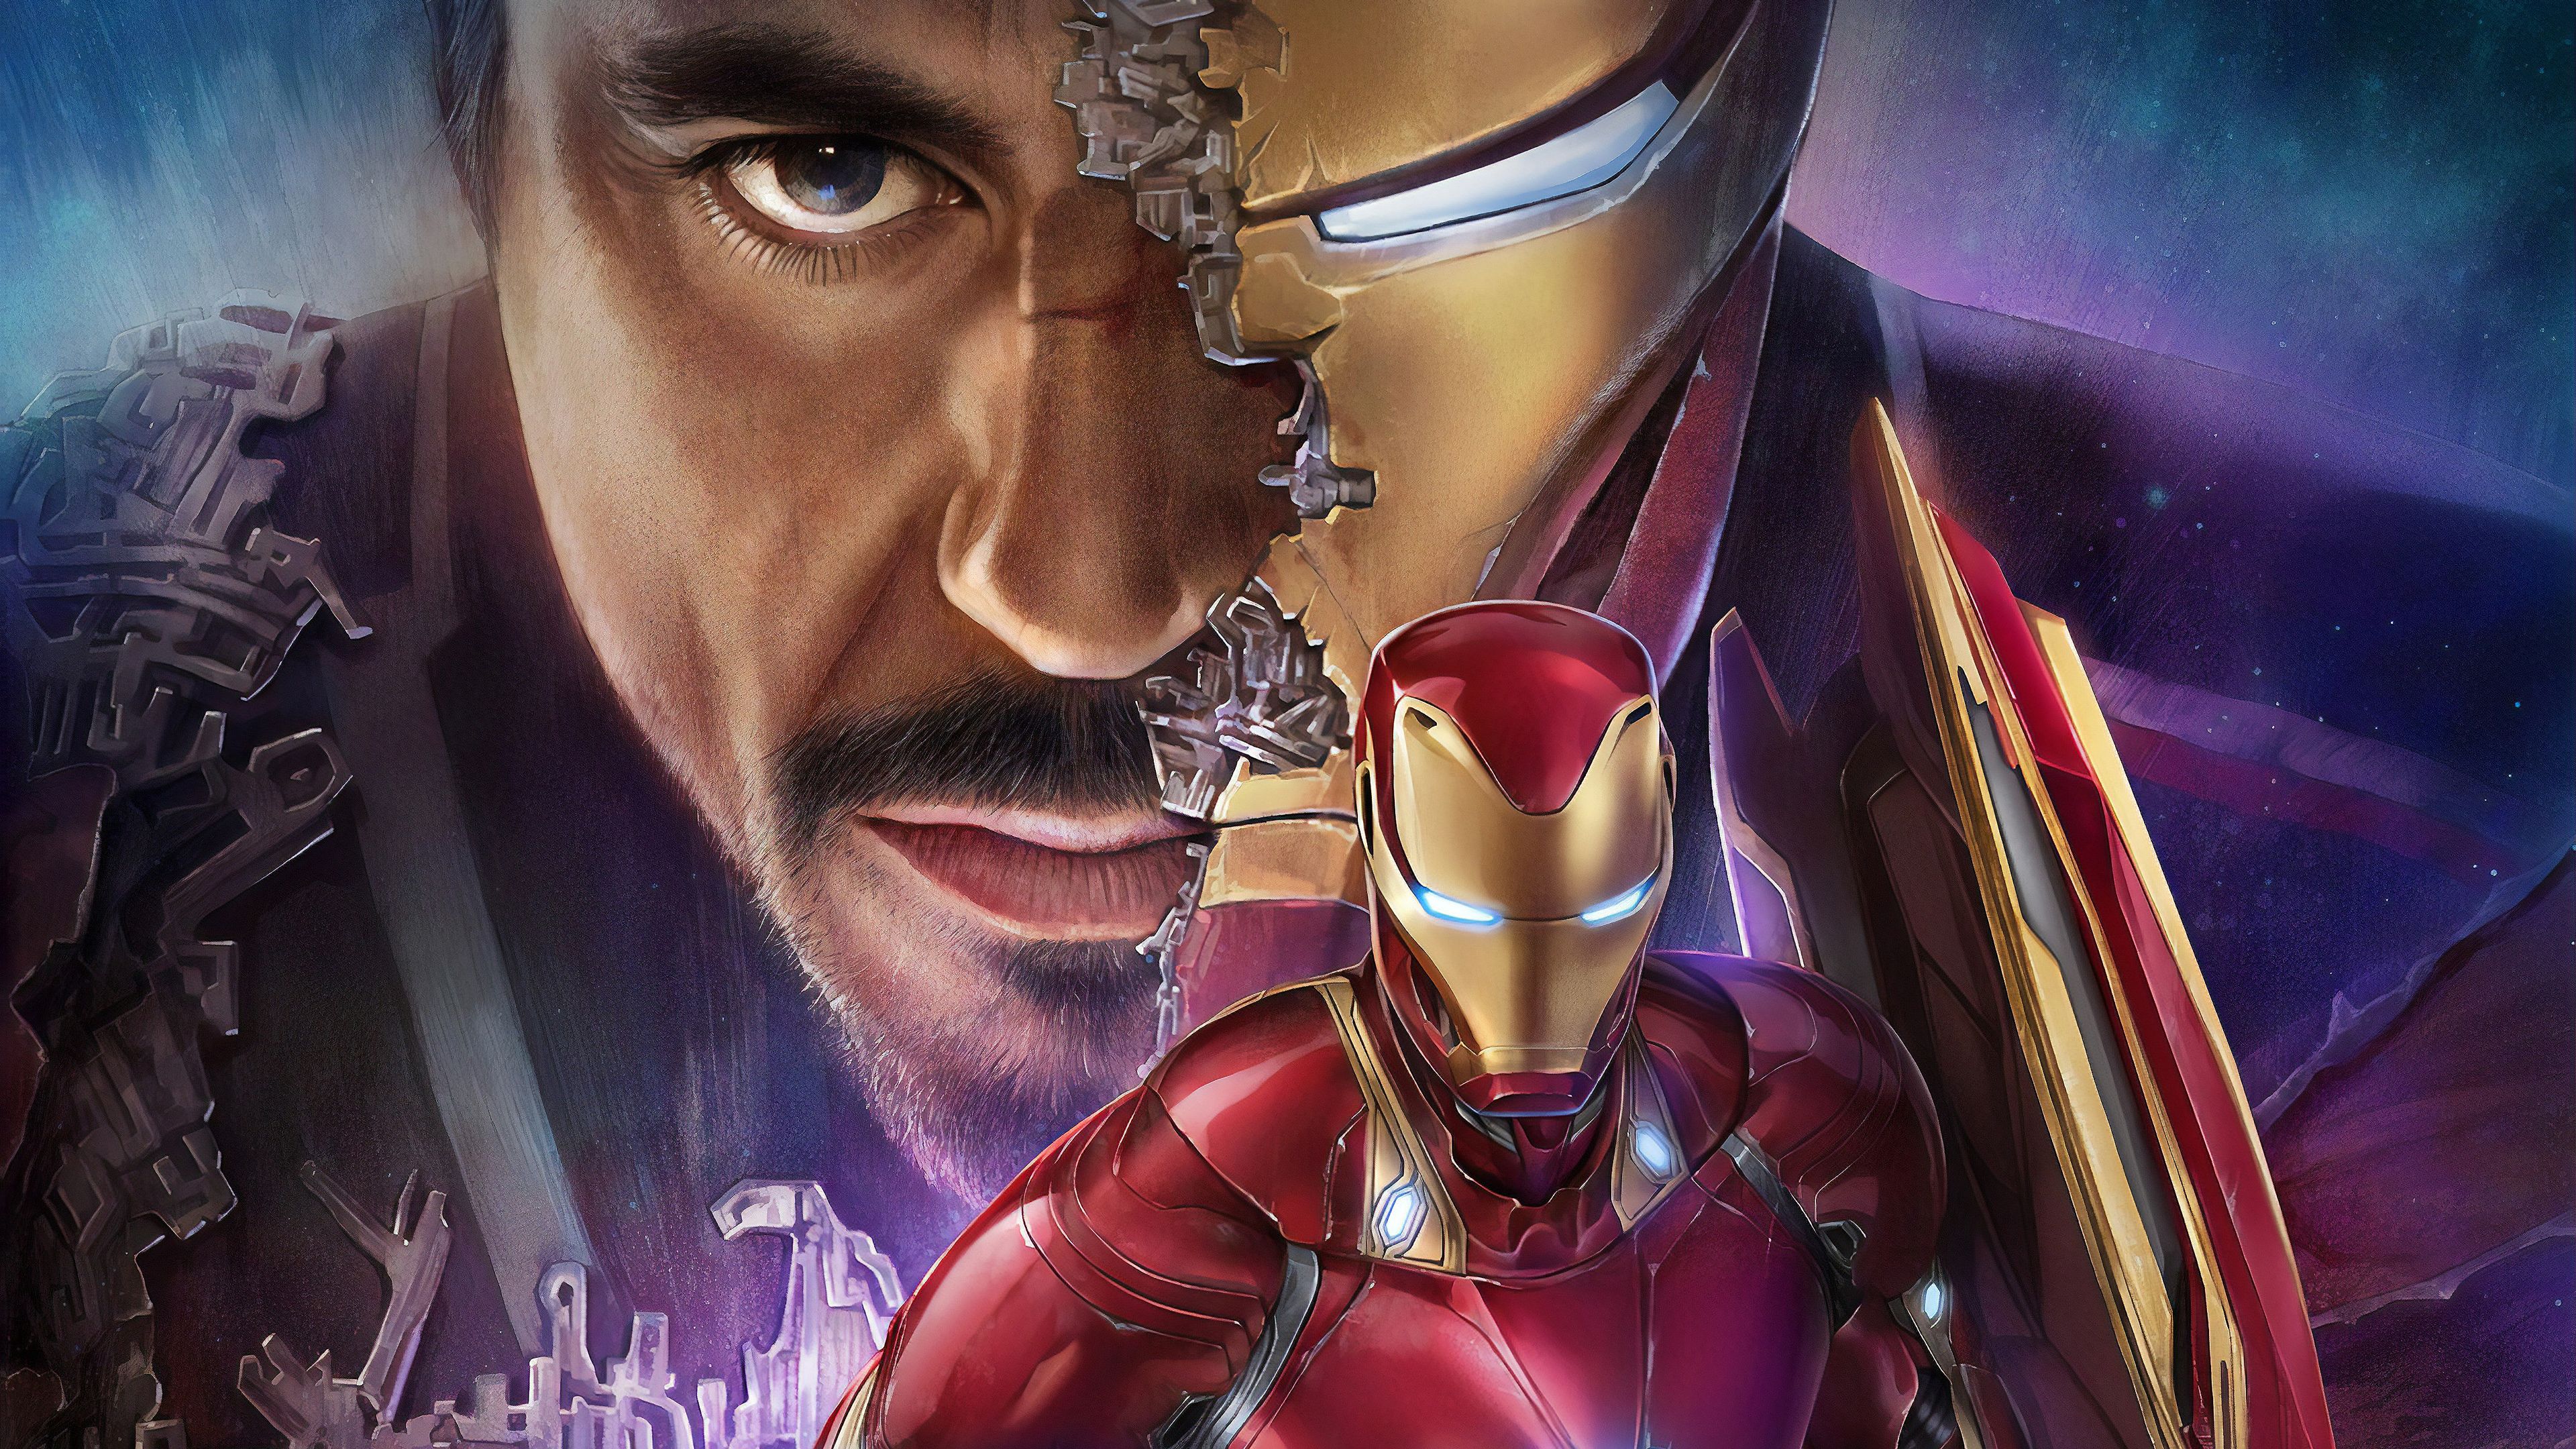 Tony Stark Iron Man 4k superheroes wallpaper, iron man wallpaper, hd- wallpaper, wallpap. Iron man wallpaper, Iron man artwork, Iron man HD wallpaper